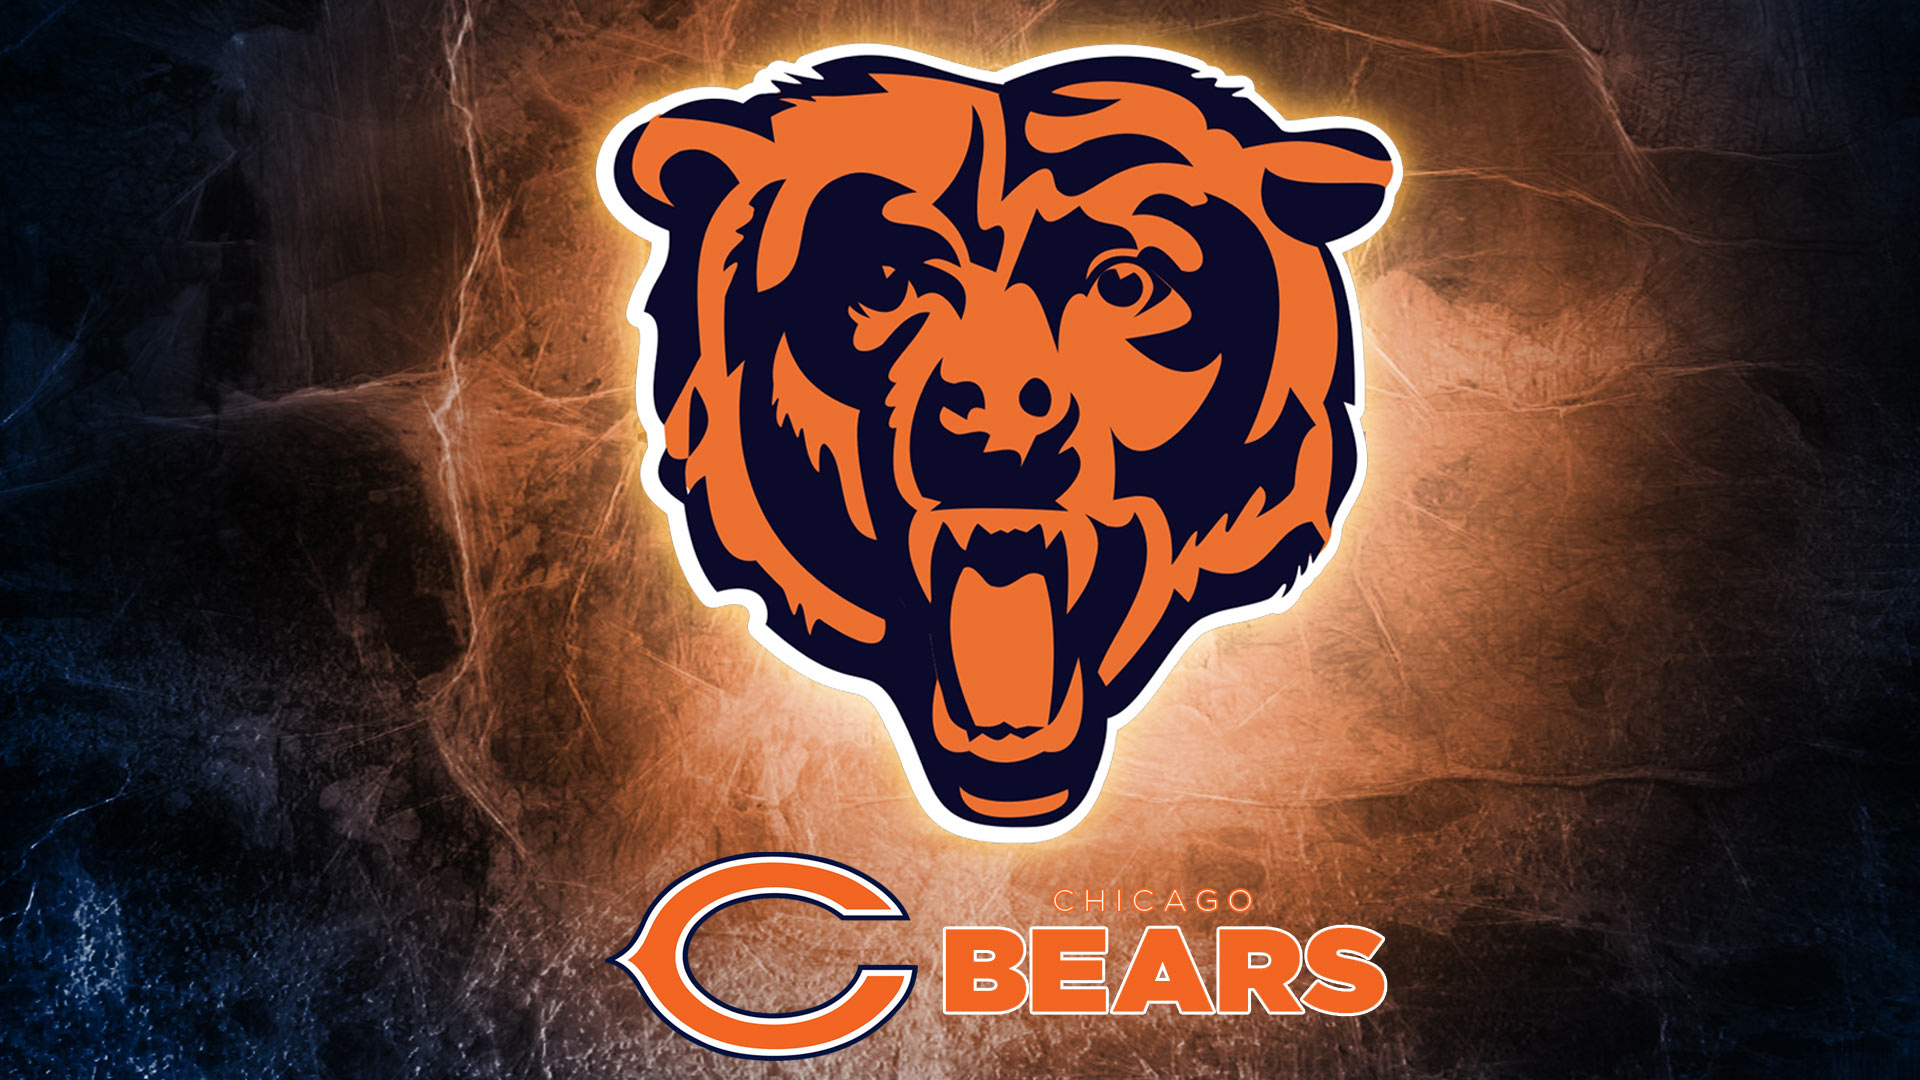 Download Chicago Bears logo Hd 1080p Wallpaper screen size 1920x1080